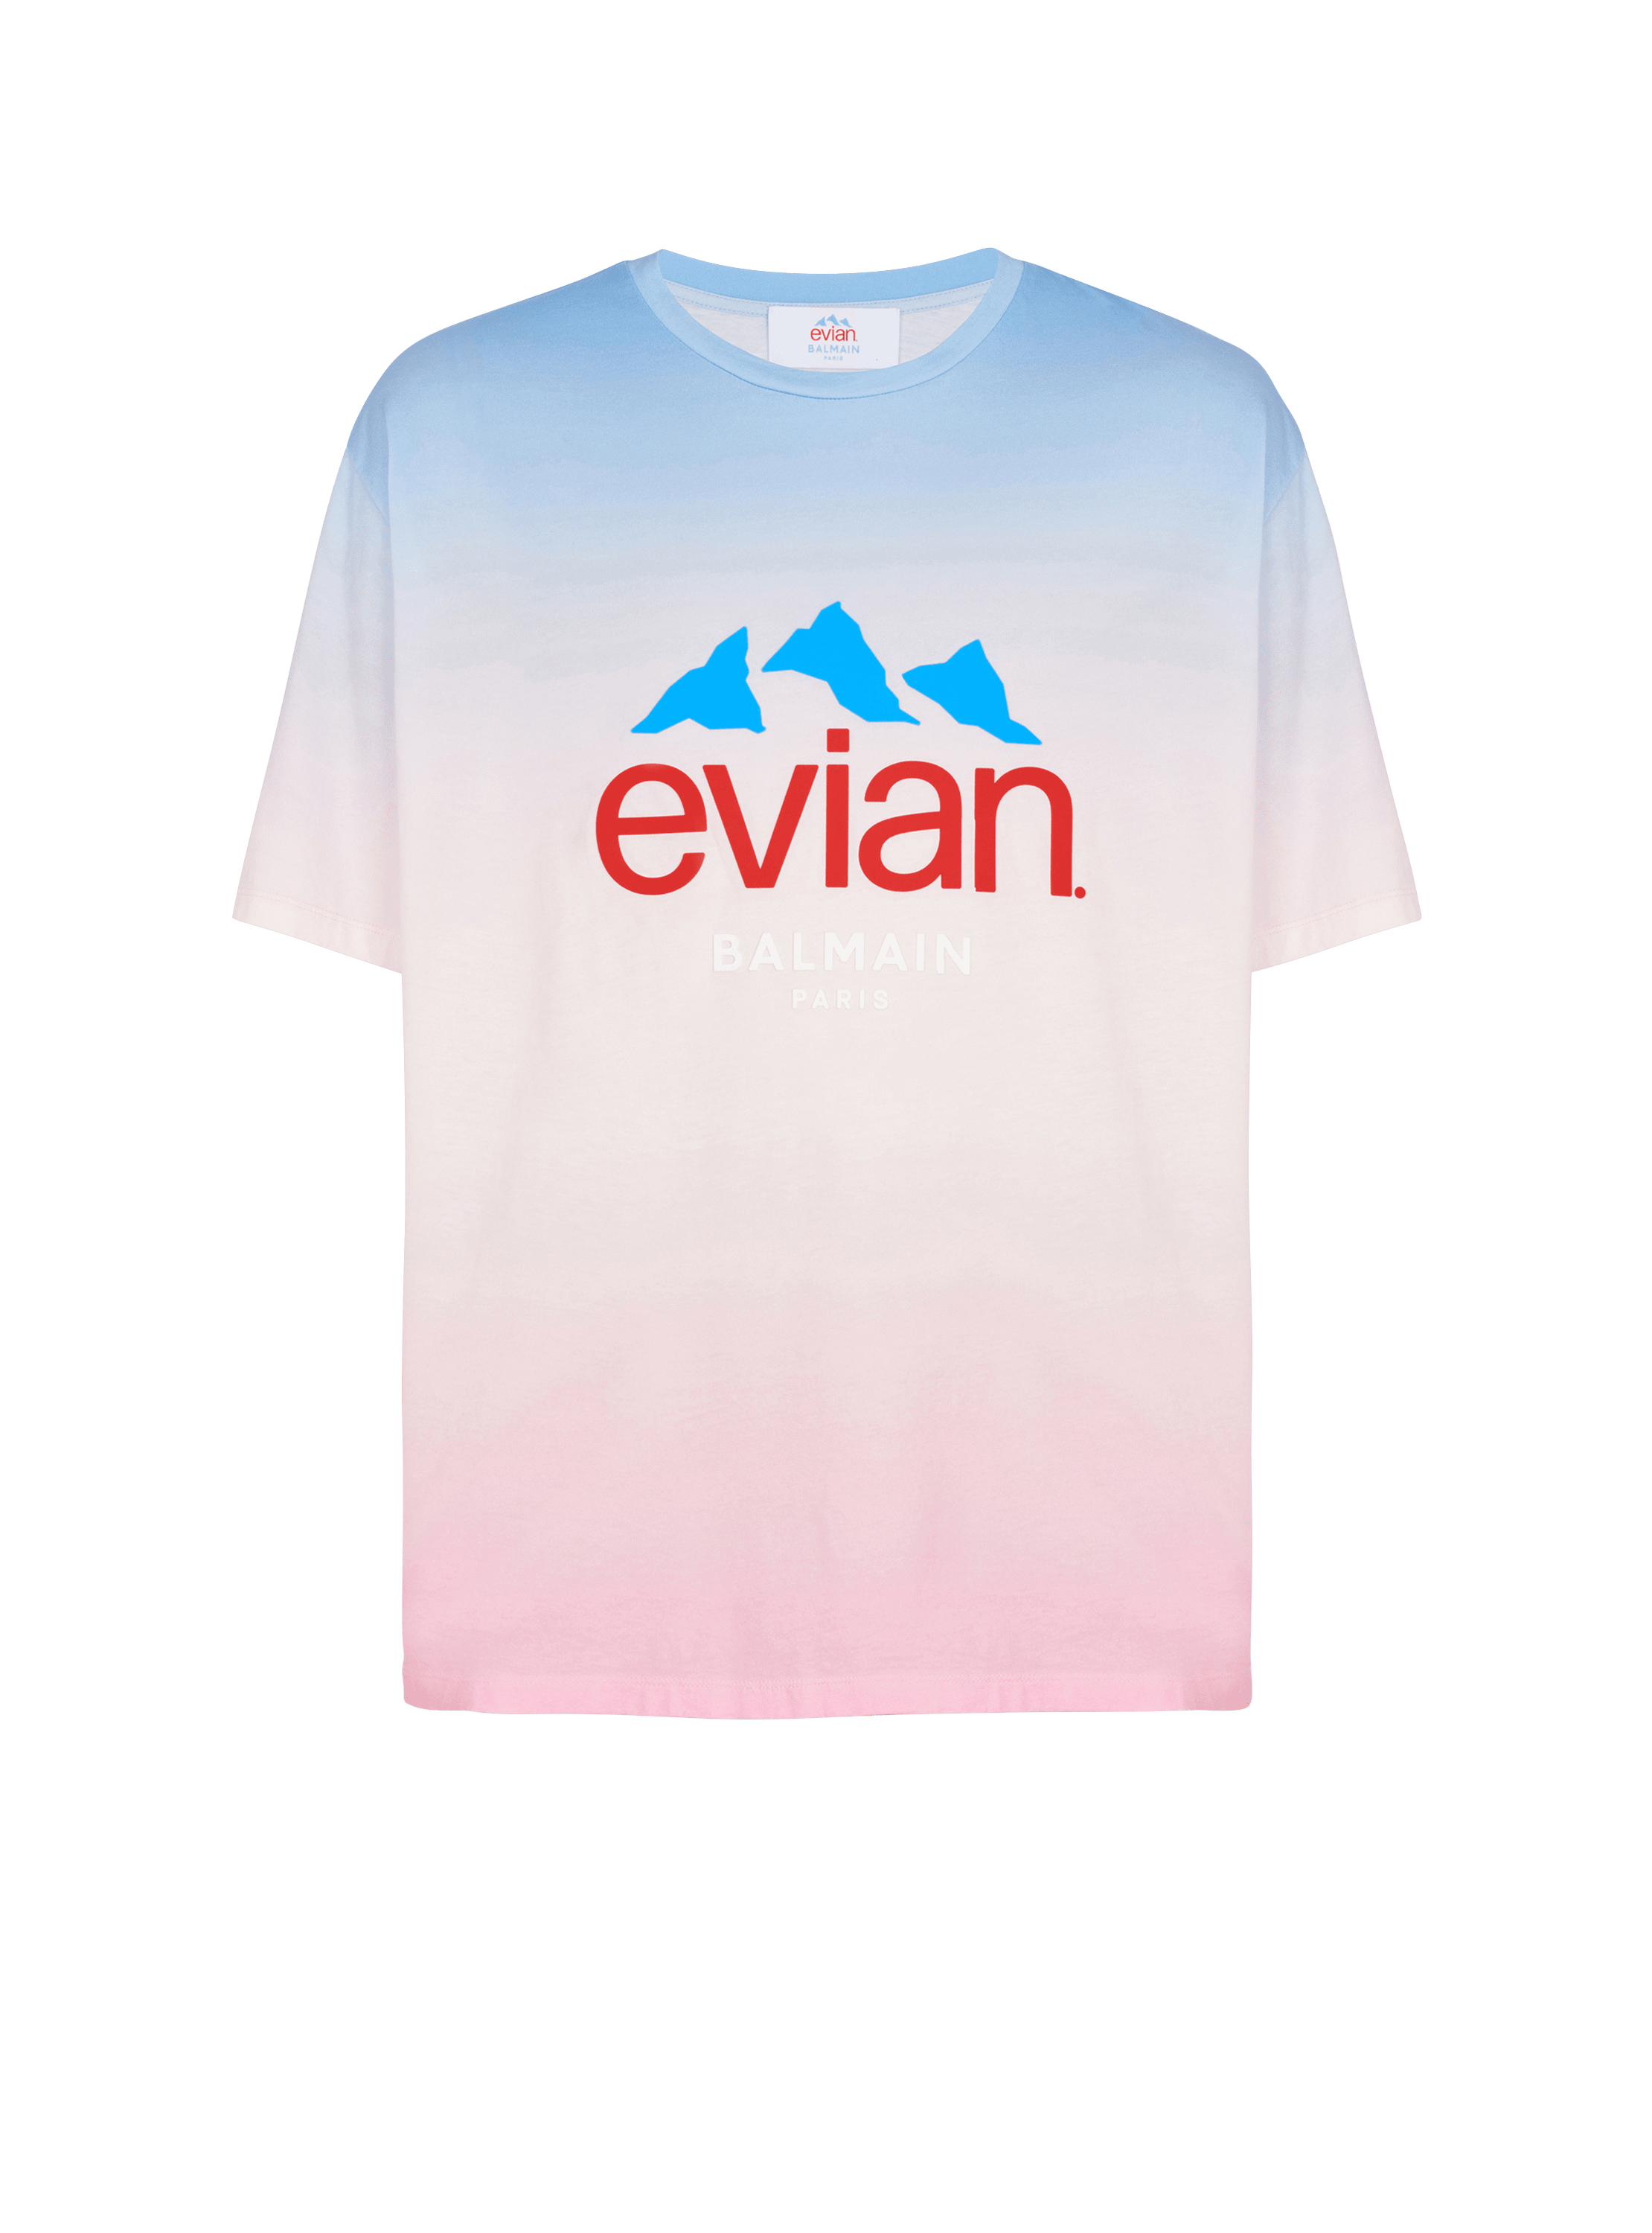 Balmain x Evian - Camiseta con degradado , multicolor, hi-res